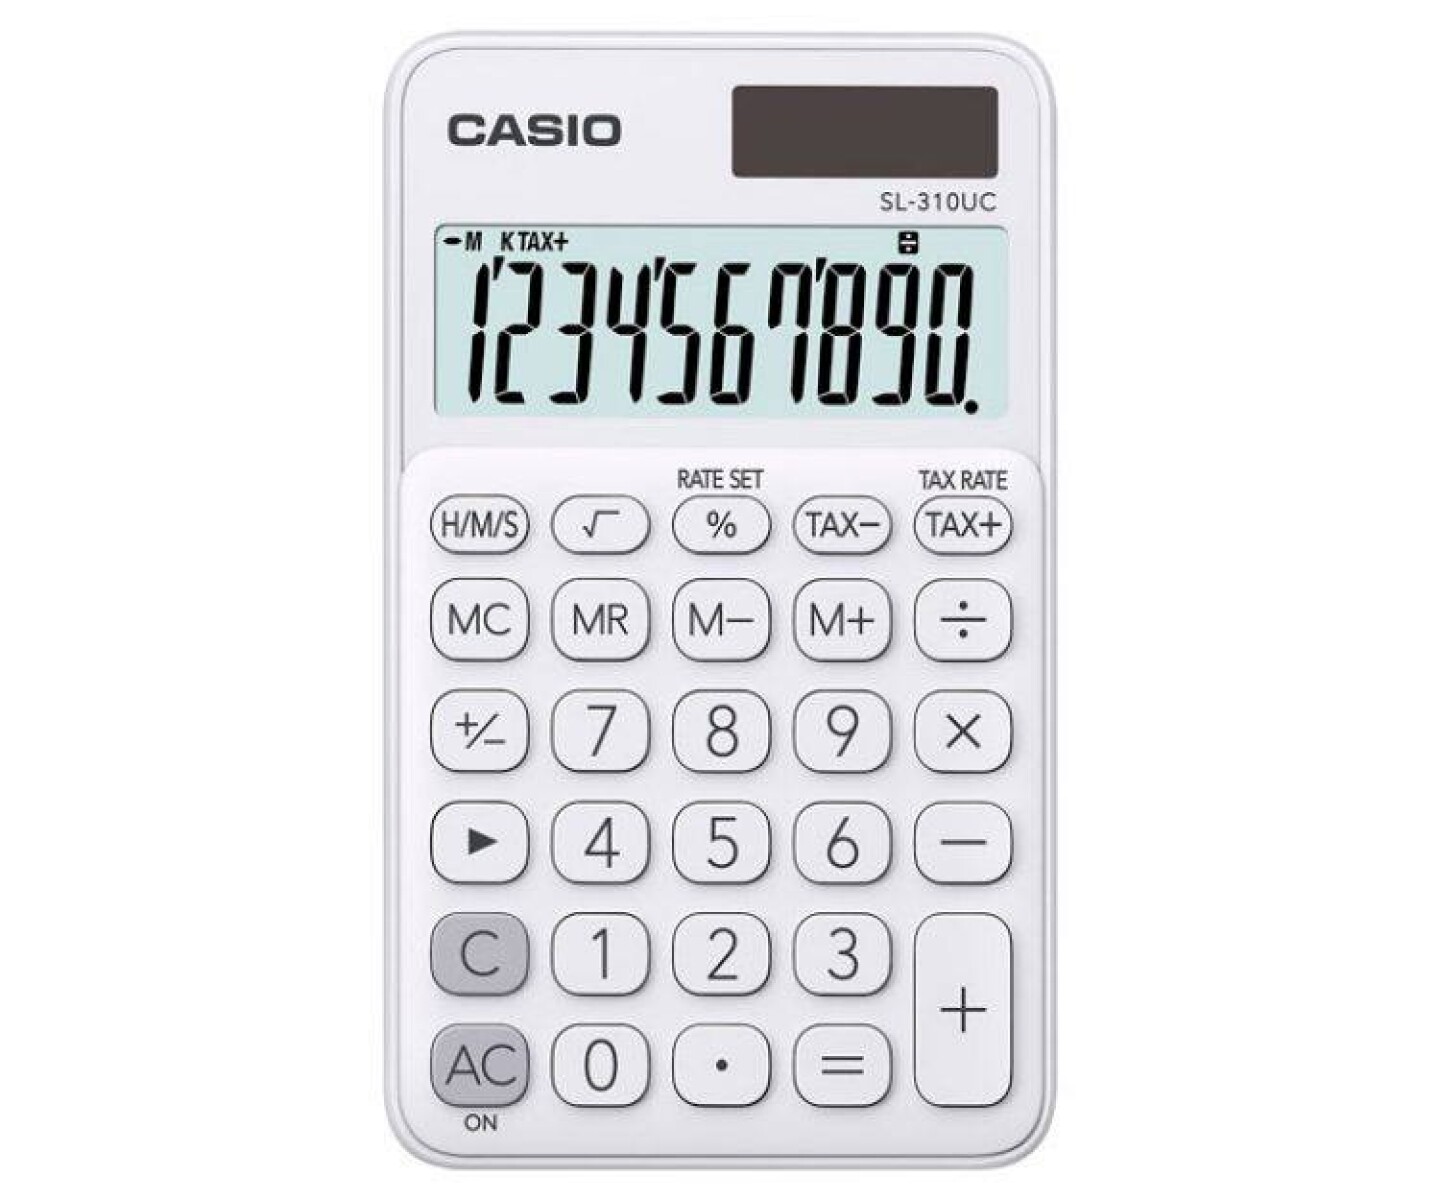 Calculadora Casio SL-310 UC - -WE 